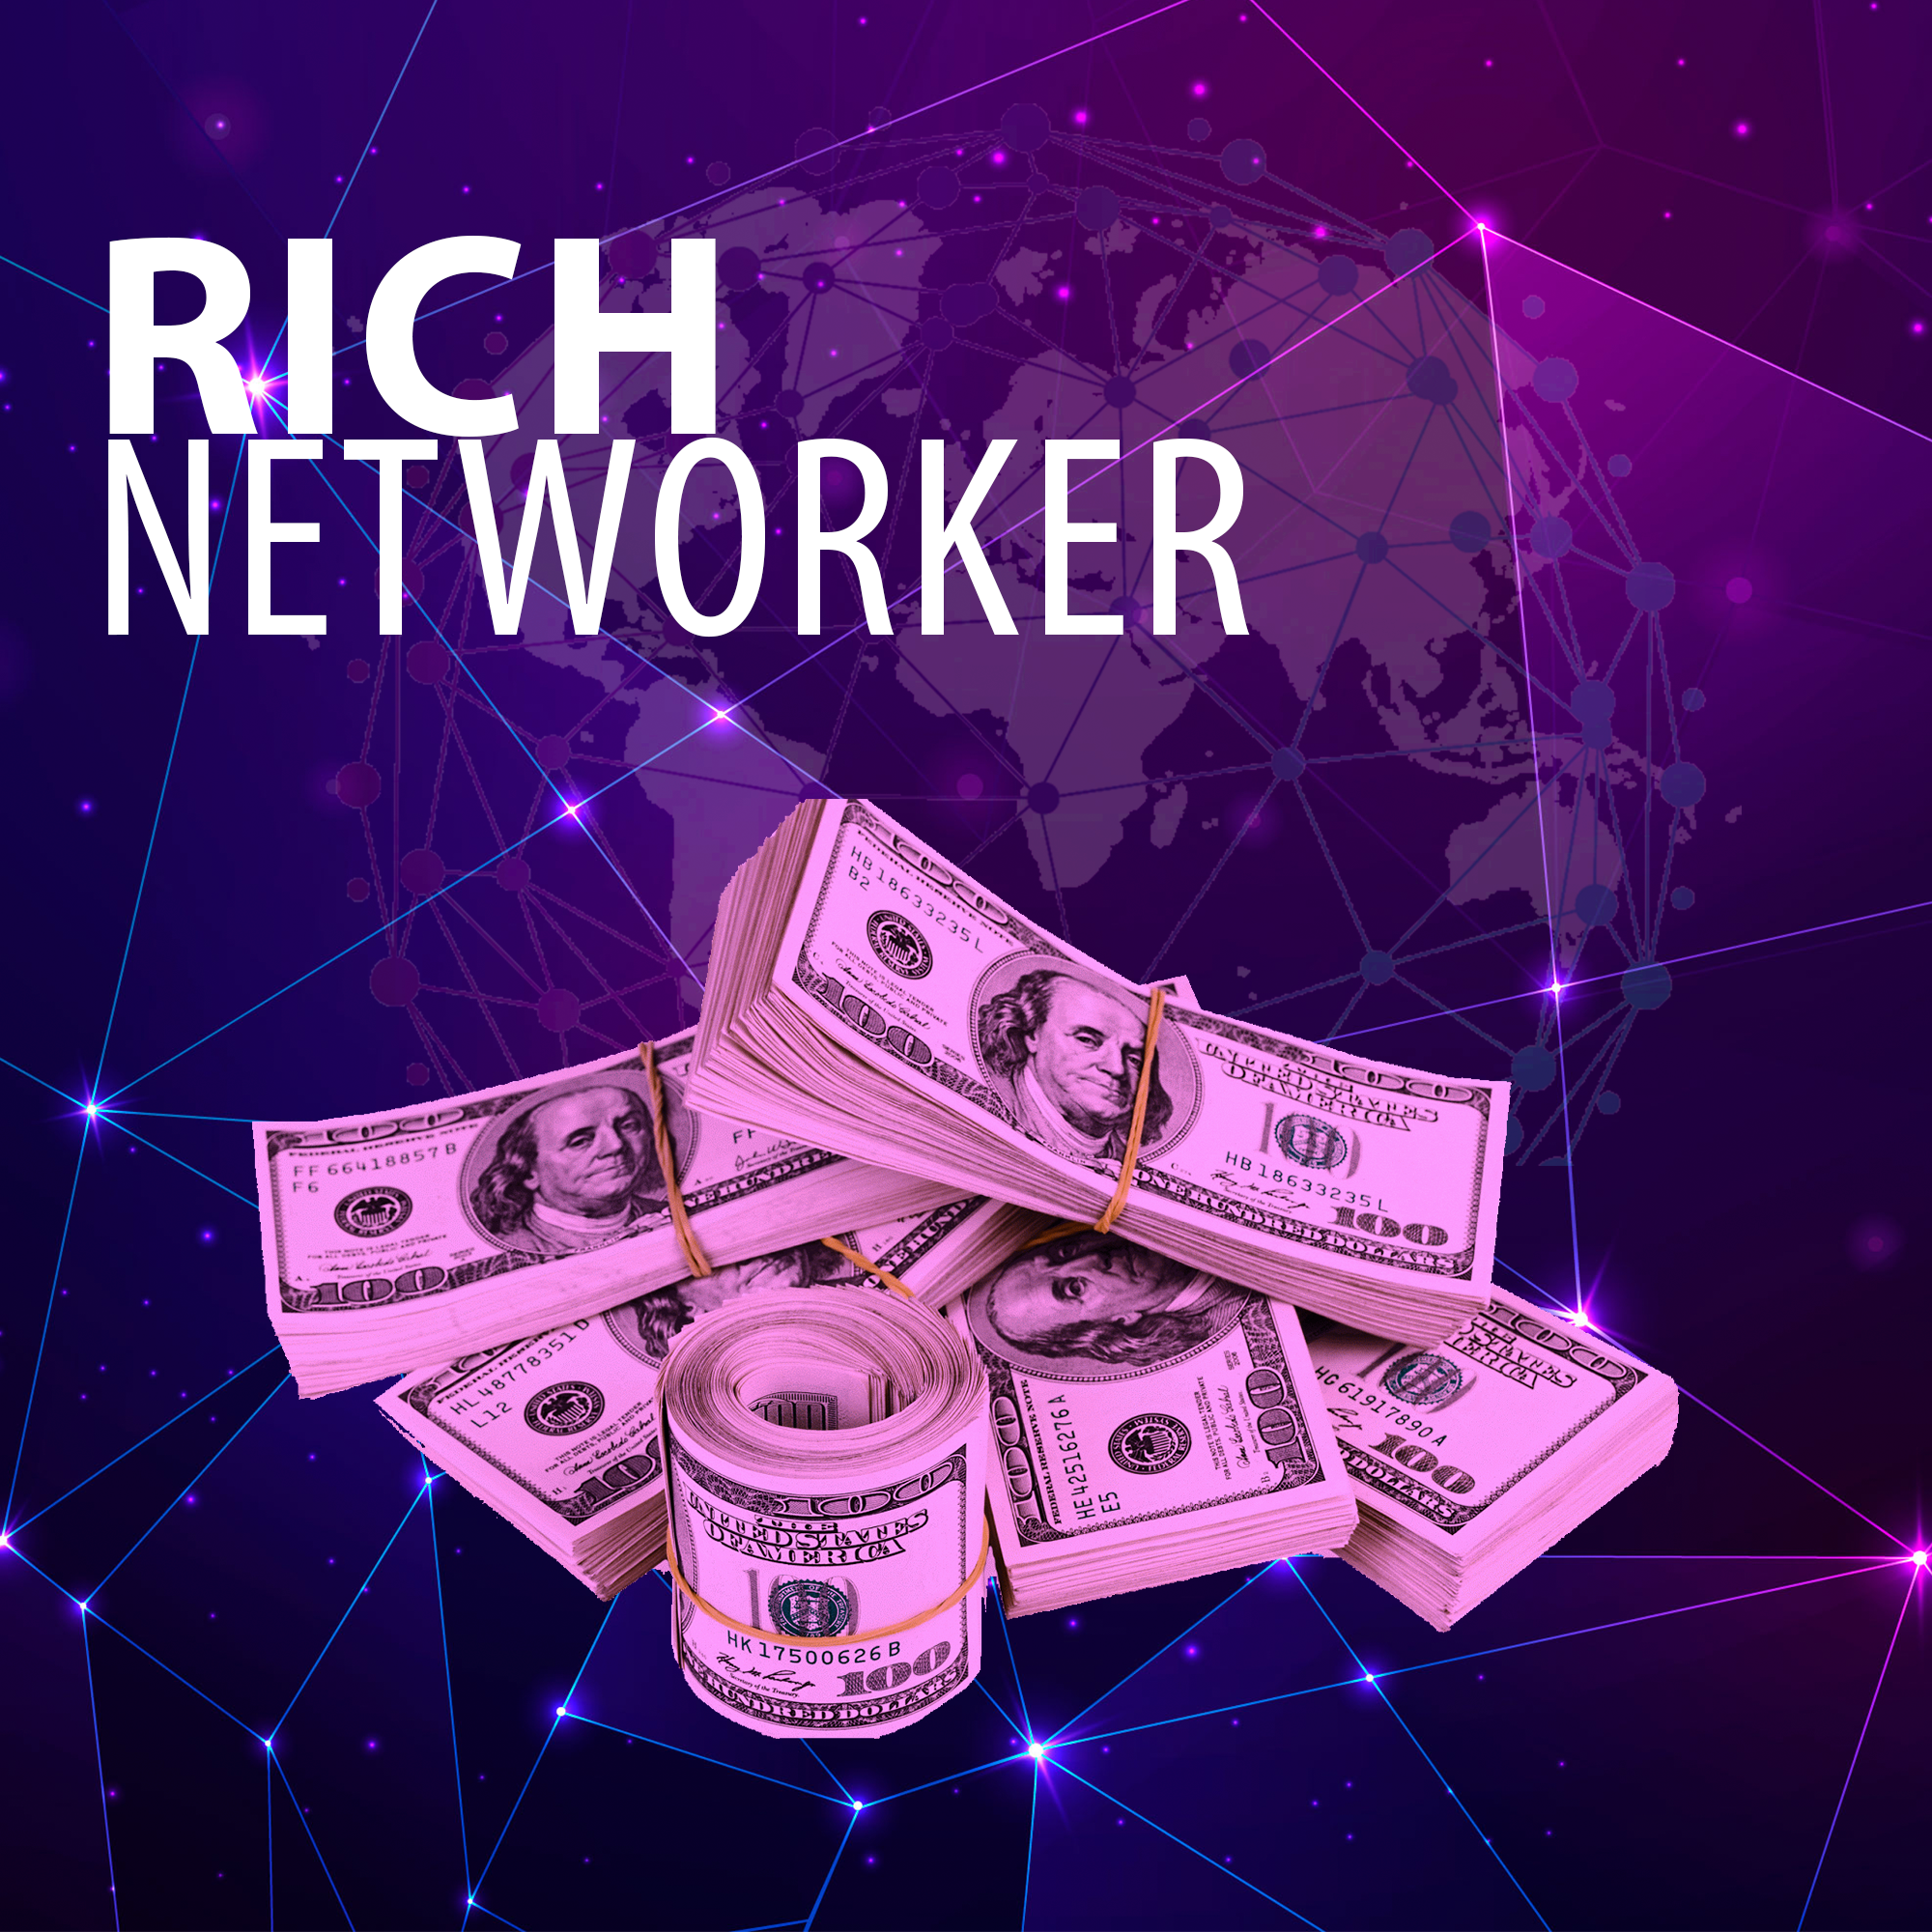 rich networker